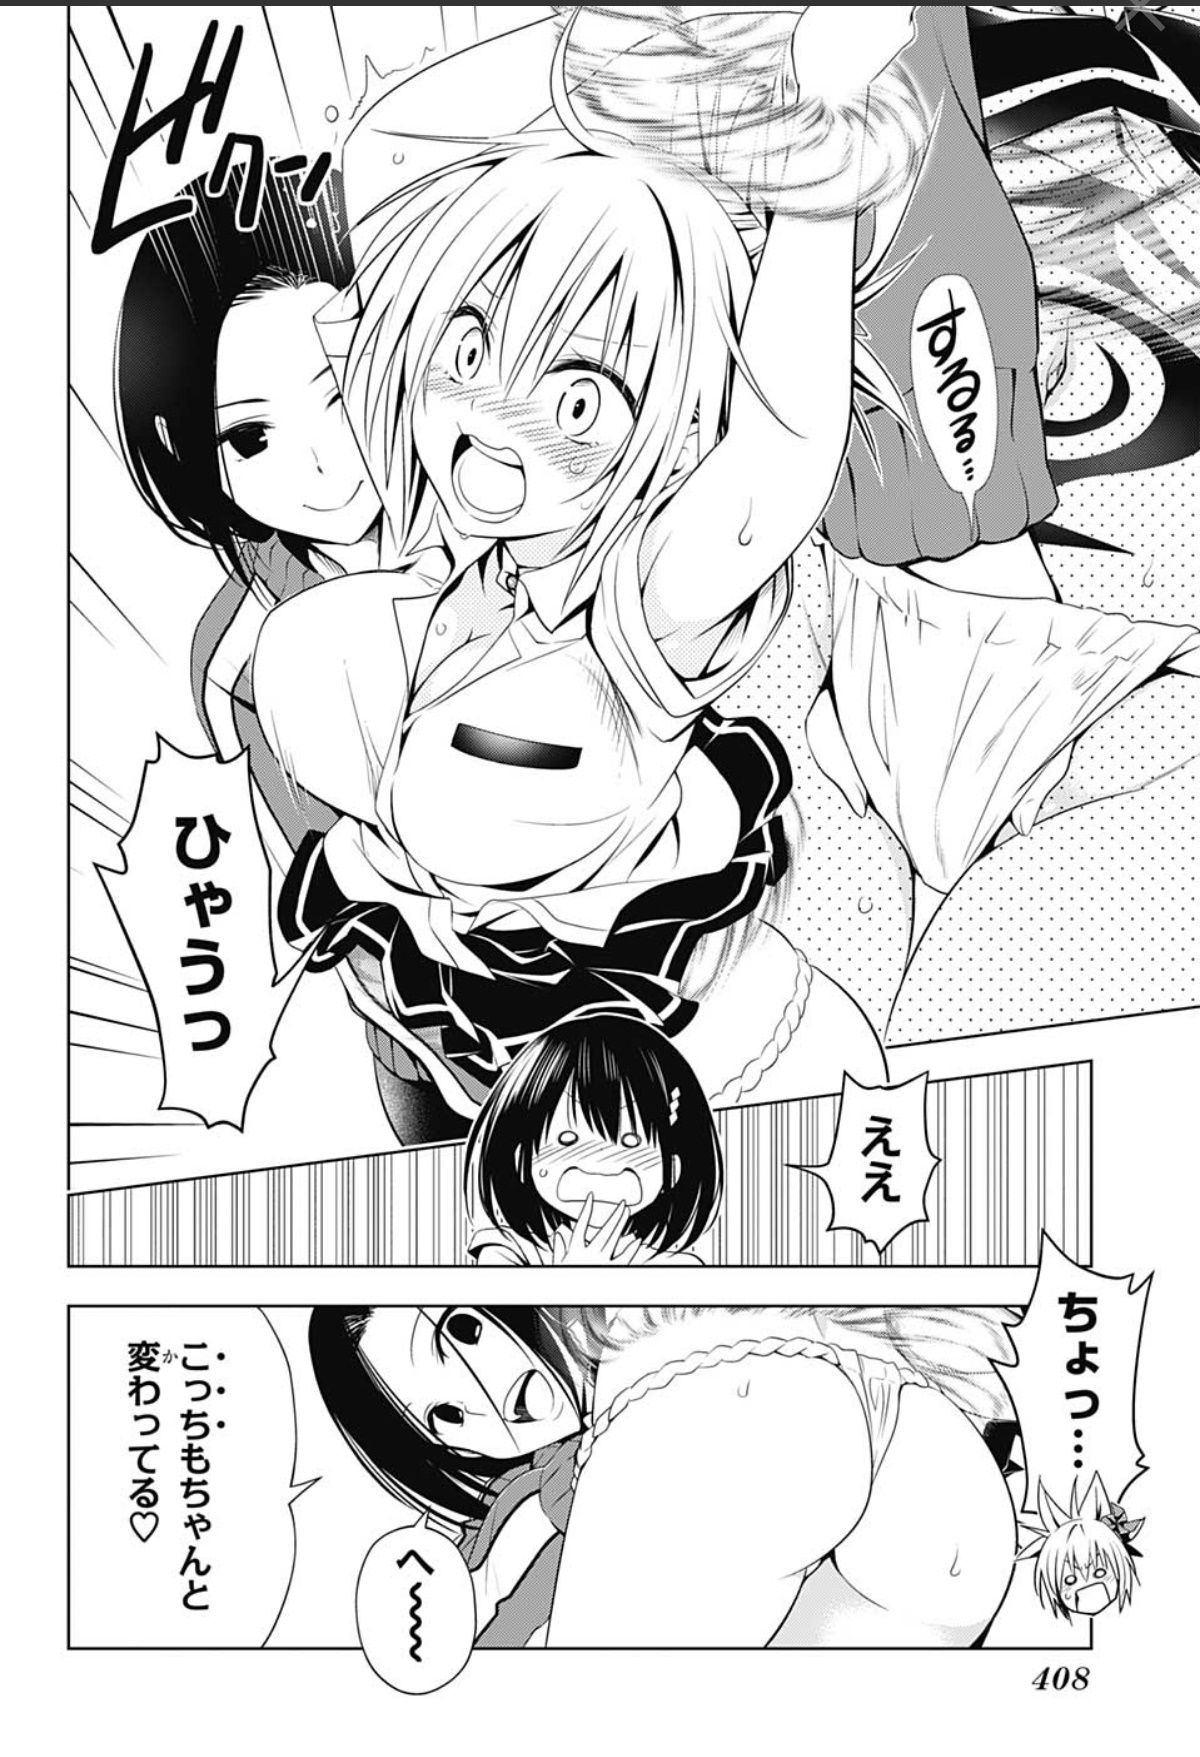 【Roho】Yabuki Sensei's "Yakisa Triangle", a new character that is too erotic will appear 3